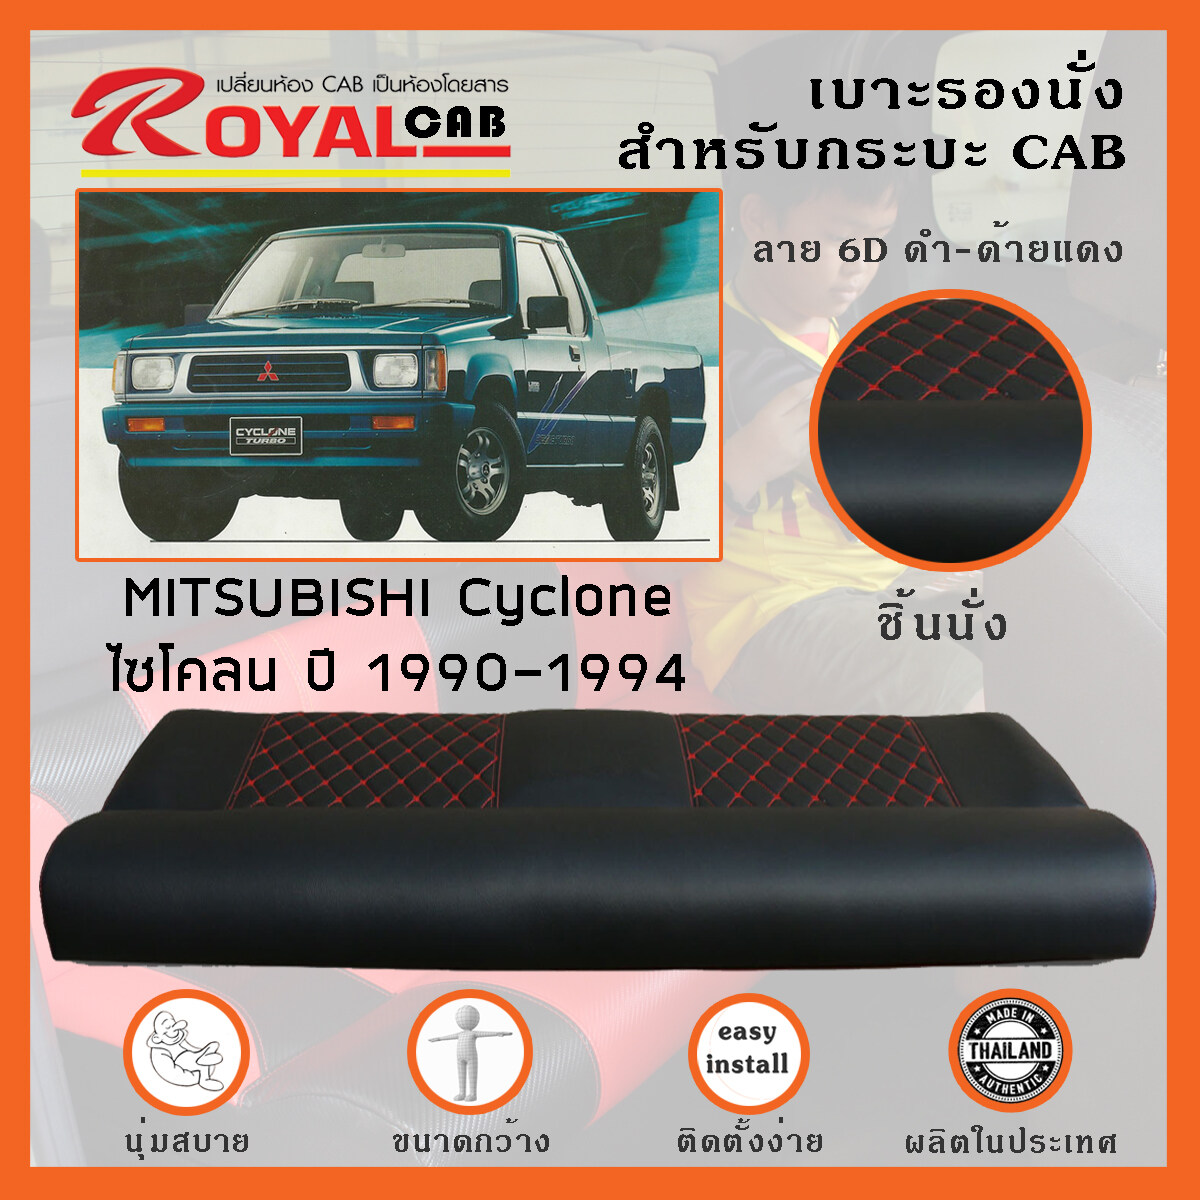 ROYAL CAB เบาะแค็บ MITSUBISHI Cyclone ปี 1990-1994 มิตซูบิชิ ไซโคลน แค็บ เบาะหลัง เบาะรองนั่ง กระบะแคป หนัง PVC คุณภาพ ฟองน้ำ 2 ชั้น - ลาย 6D Made in Thailand สี 6D ดำ-ด้ายแดง สี 6D ดำ-ด้ายแดง